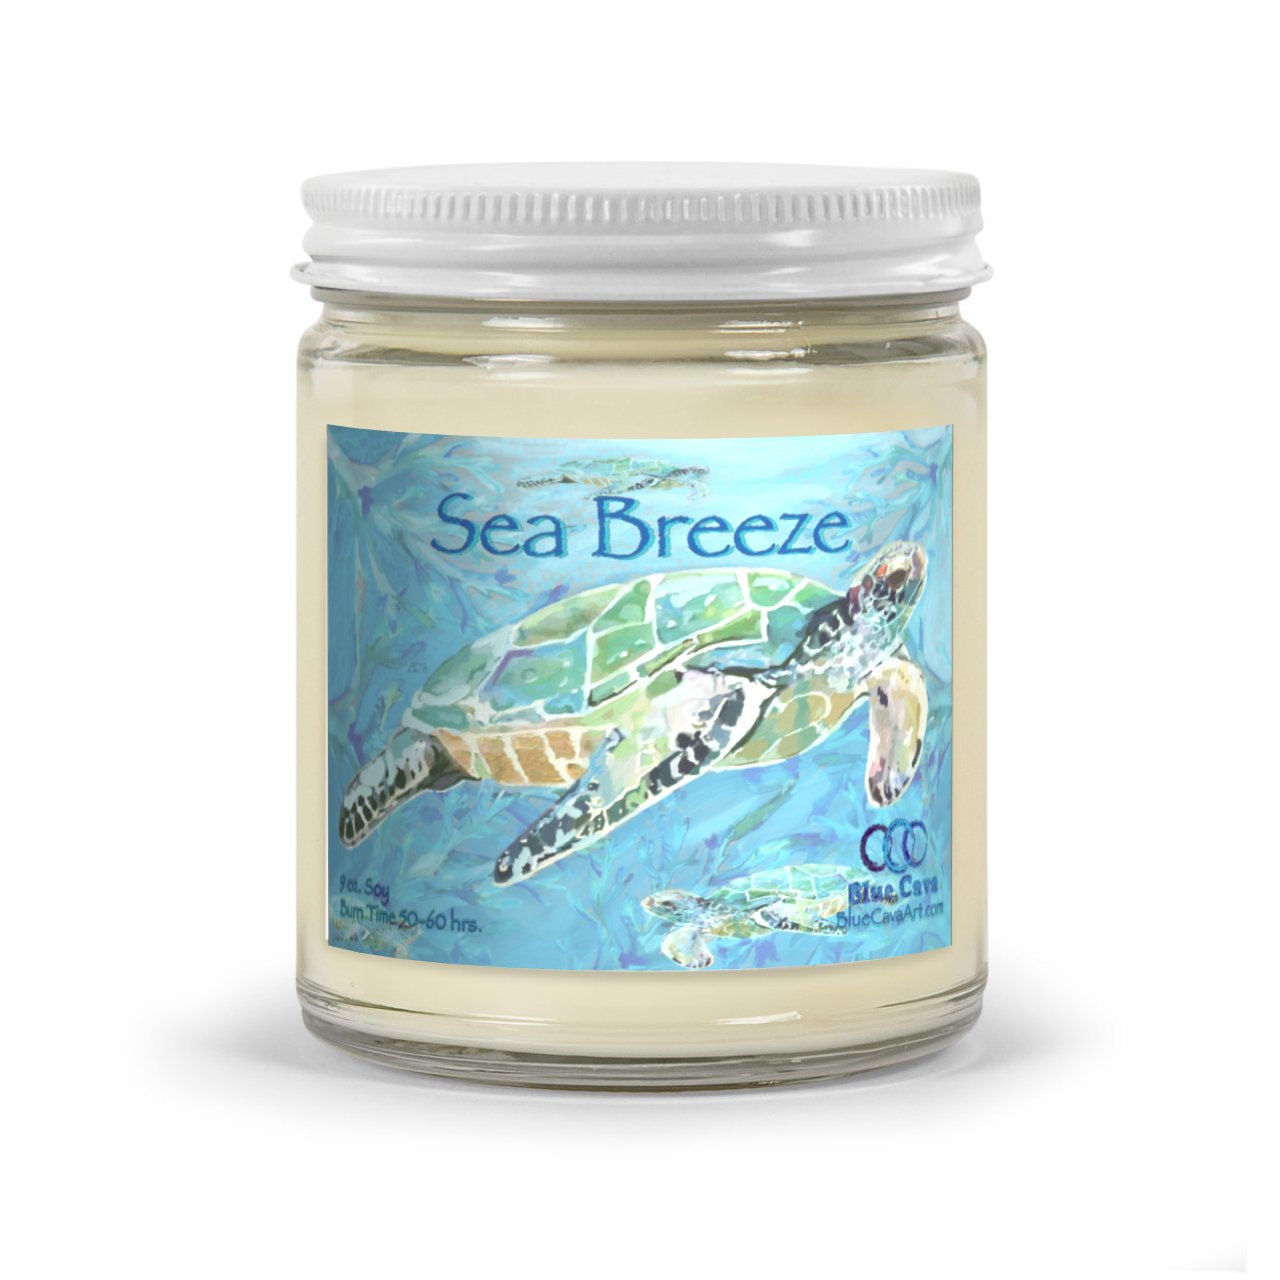 Sea Breeze Candle 9 oz. - Blue Cava